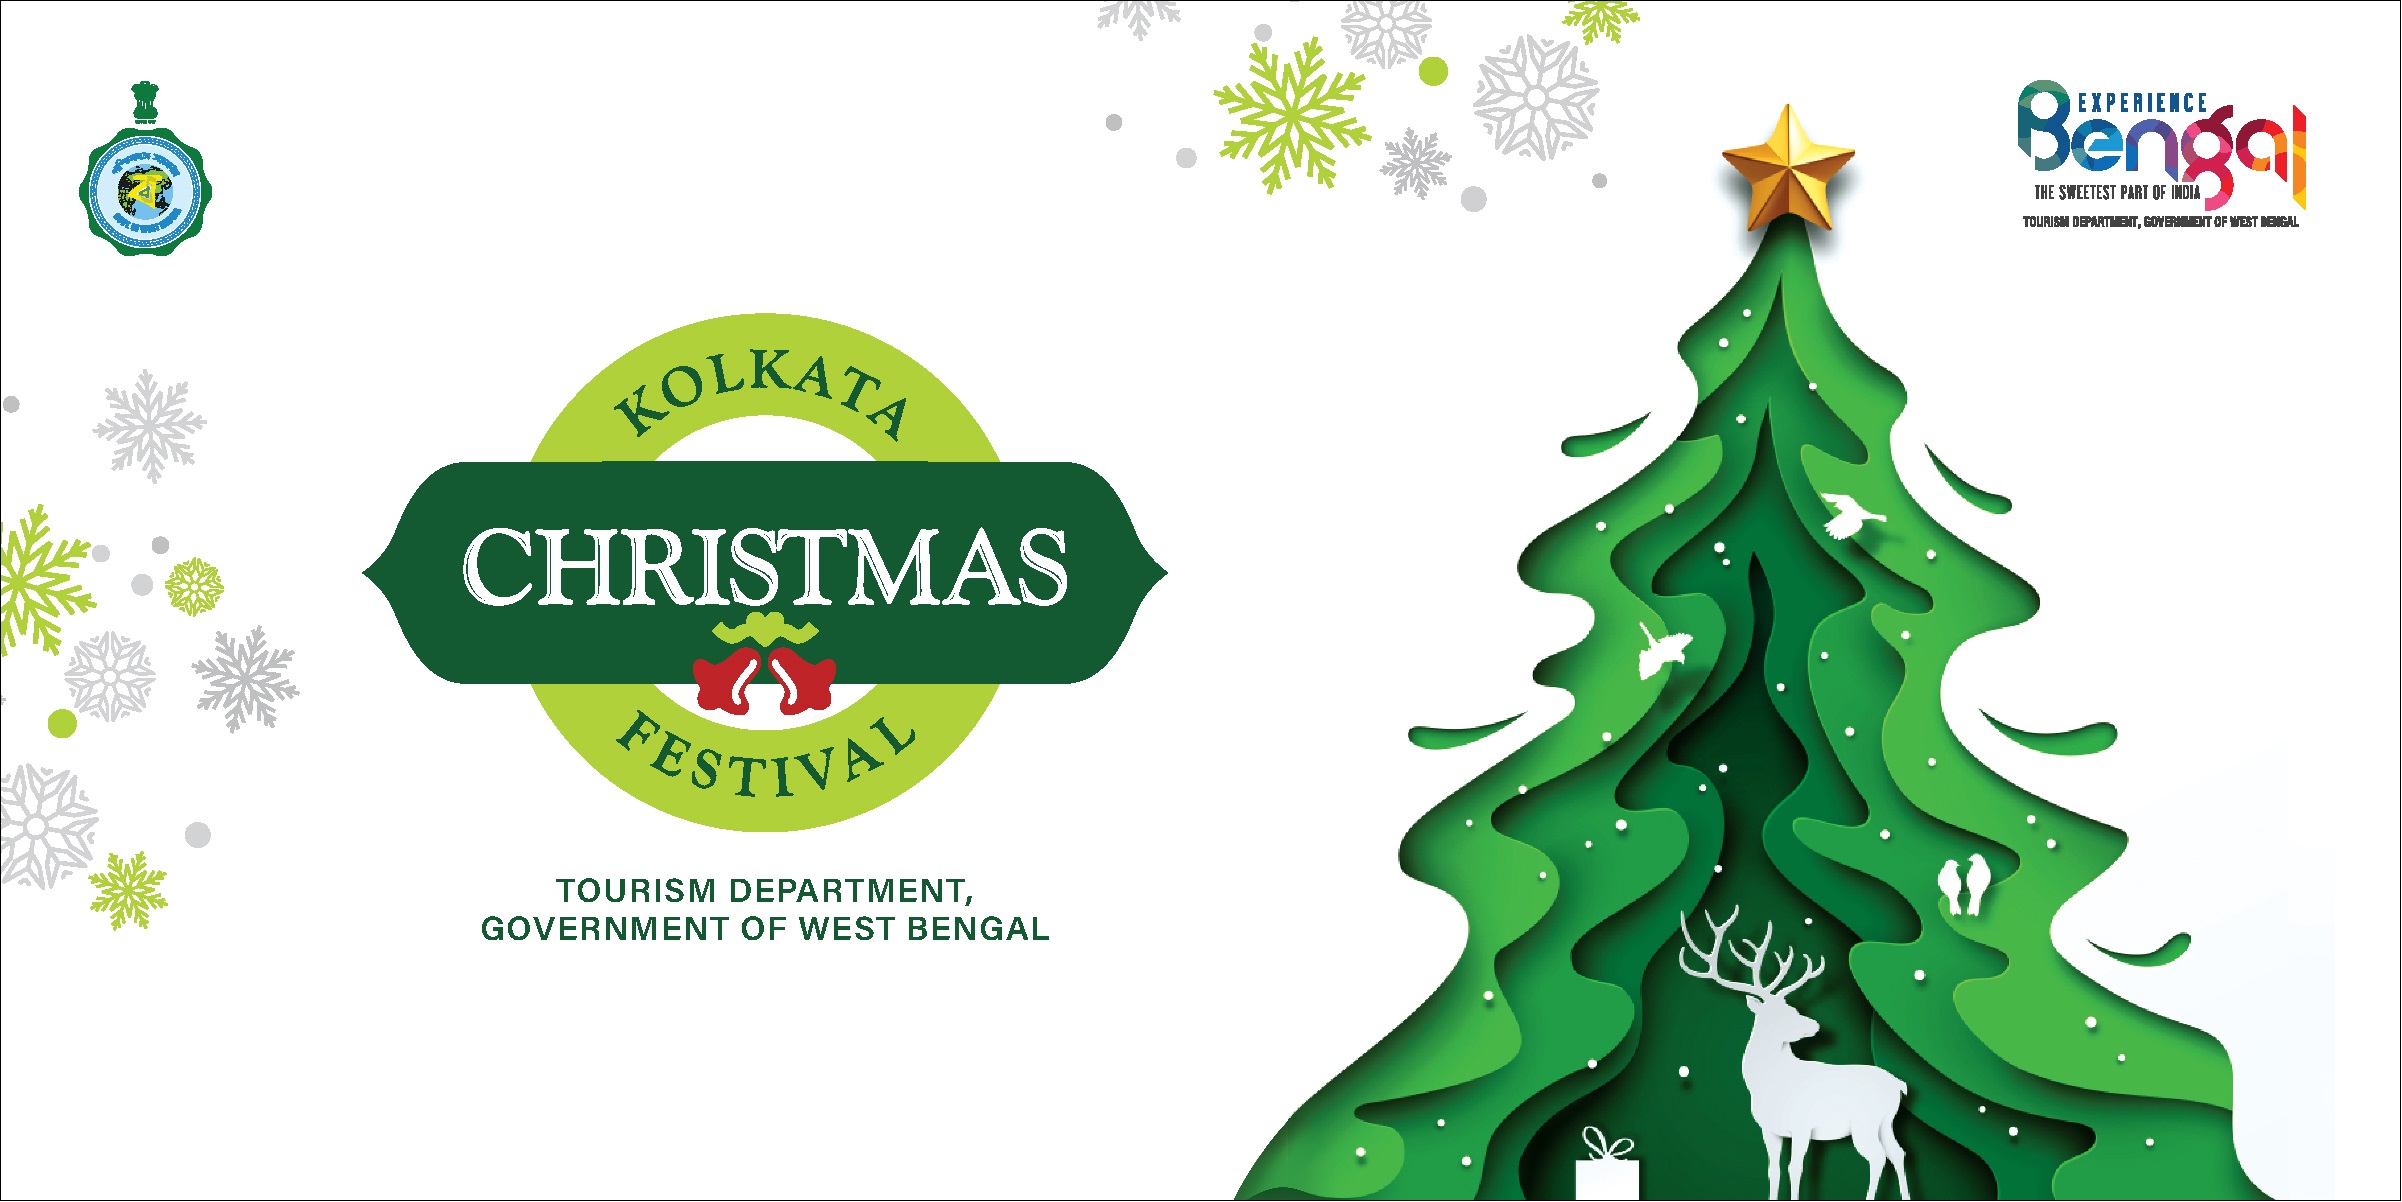 Kolkata Christmas Festival 2022